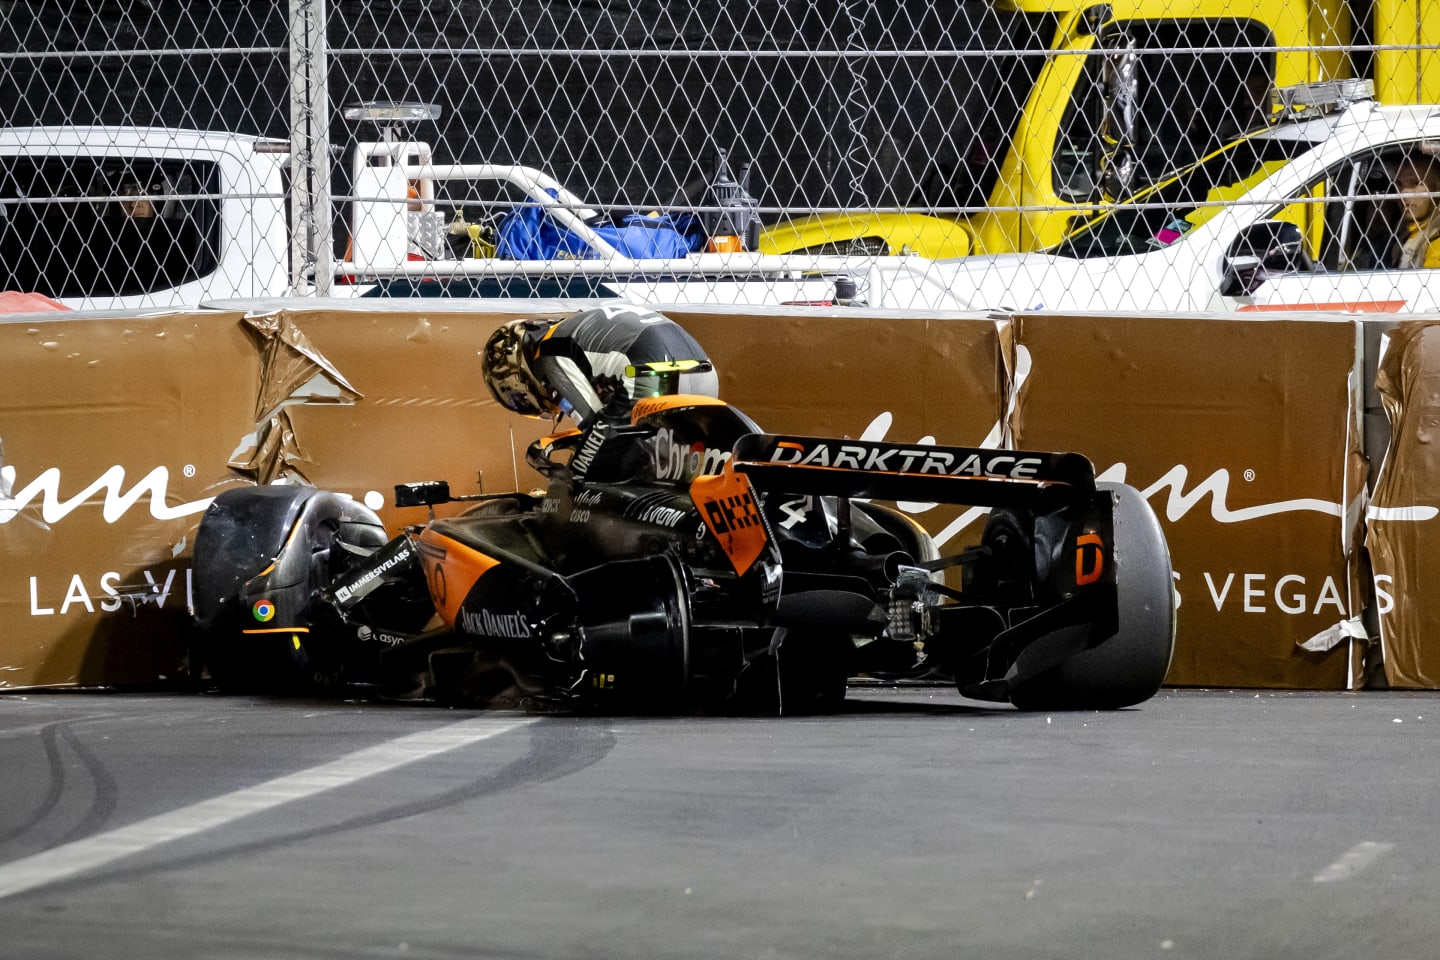 LAS VEGAS - Lando Norris (McLaren) after his crash during the Las Vegas Formula 1 Grand Prix at the Las Vegas Strip Circuit in Nevada. ANP SEM VAN DER WAL (Photo by ANP via Getty Images)